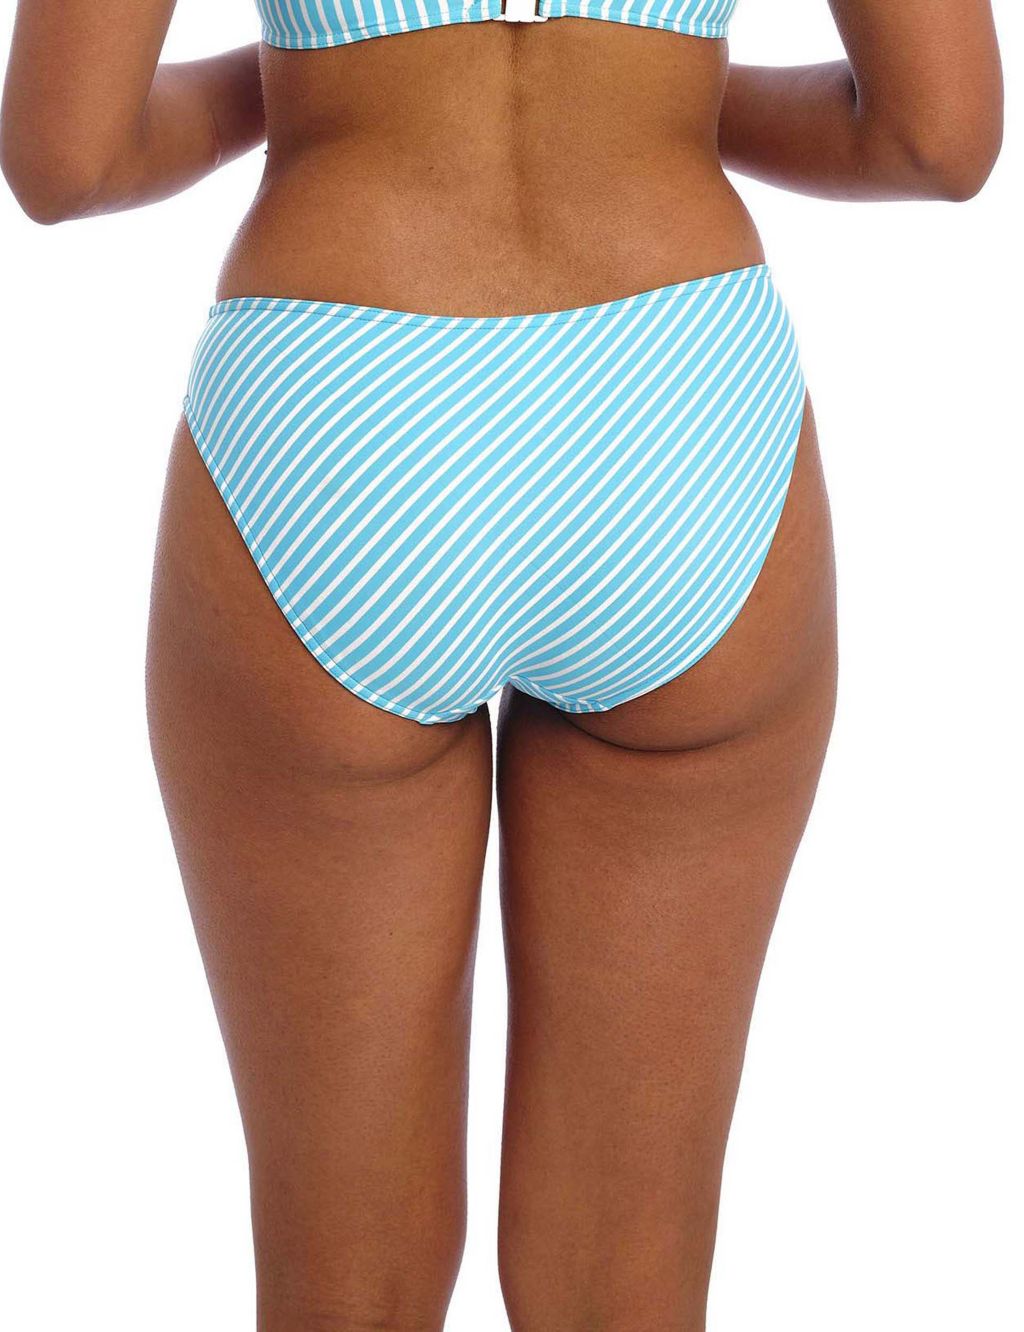 Jewel Cove Striped Bikini Bottoms image 4